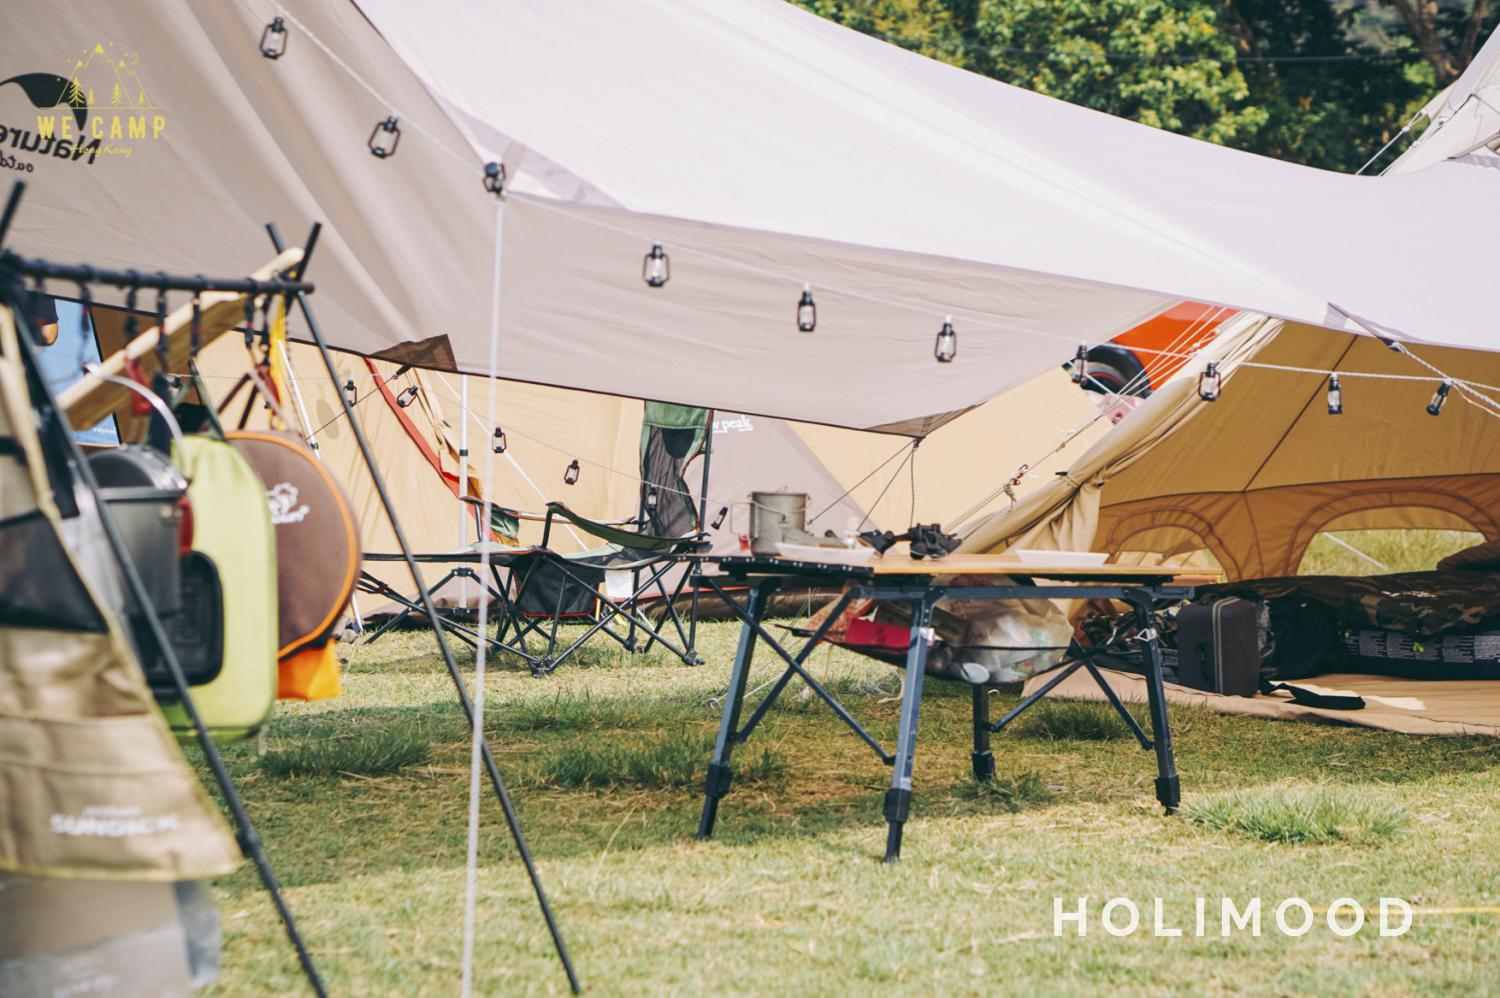 We Camp - Pool Side Camping & Glamping & BYOS & Car Camping WeCamp -  A Zone Car Camping (BYOT/Tents Rental/Car Roof Camping) 12